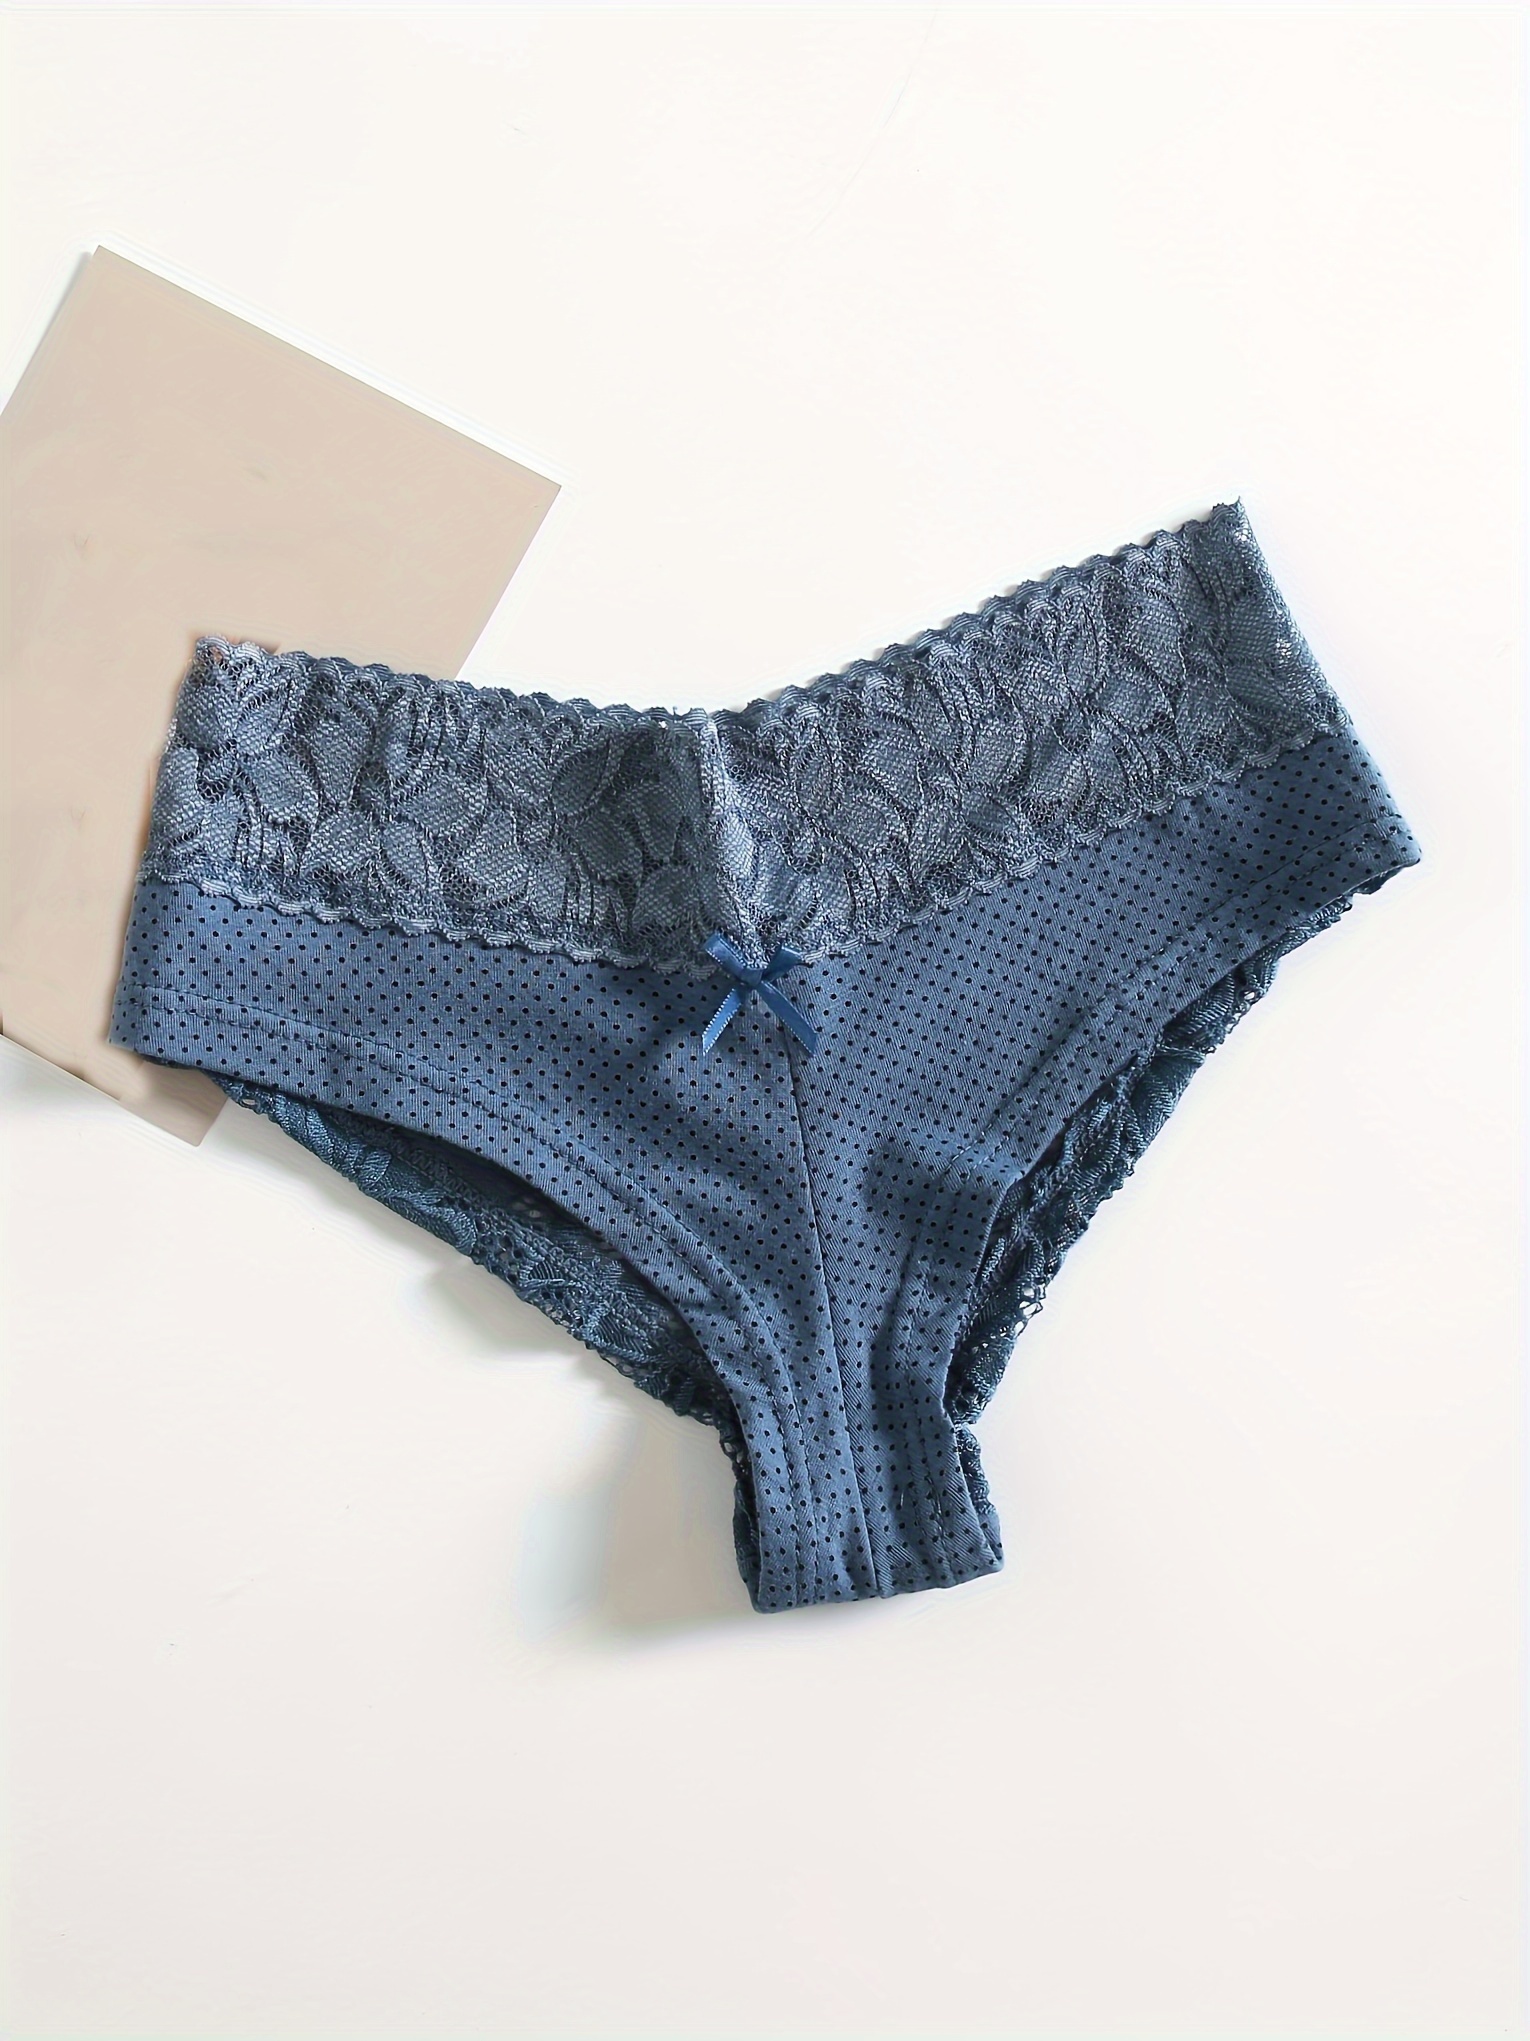 FINETOO 6pcs Seamless Contrast Lace Panty